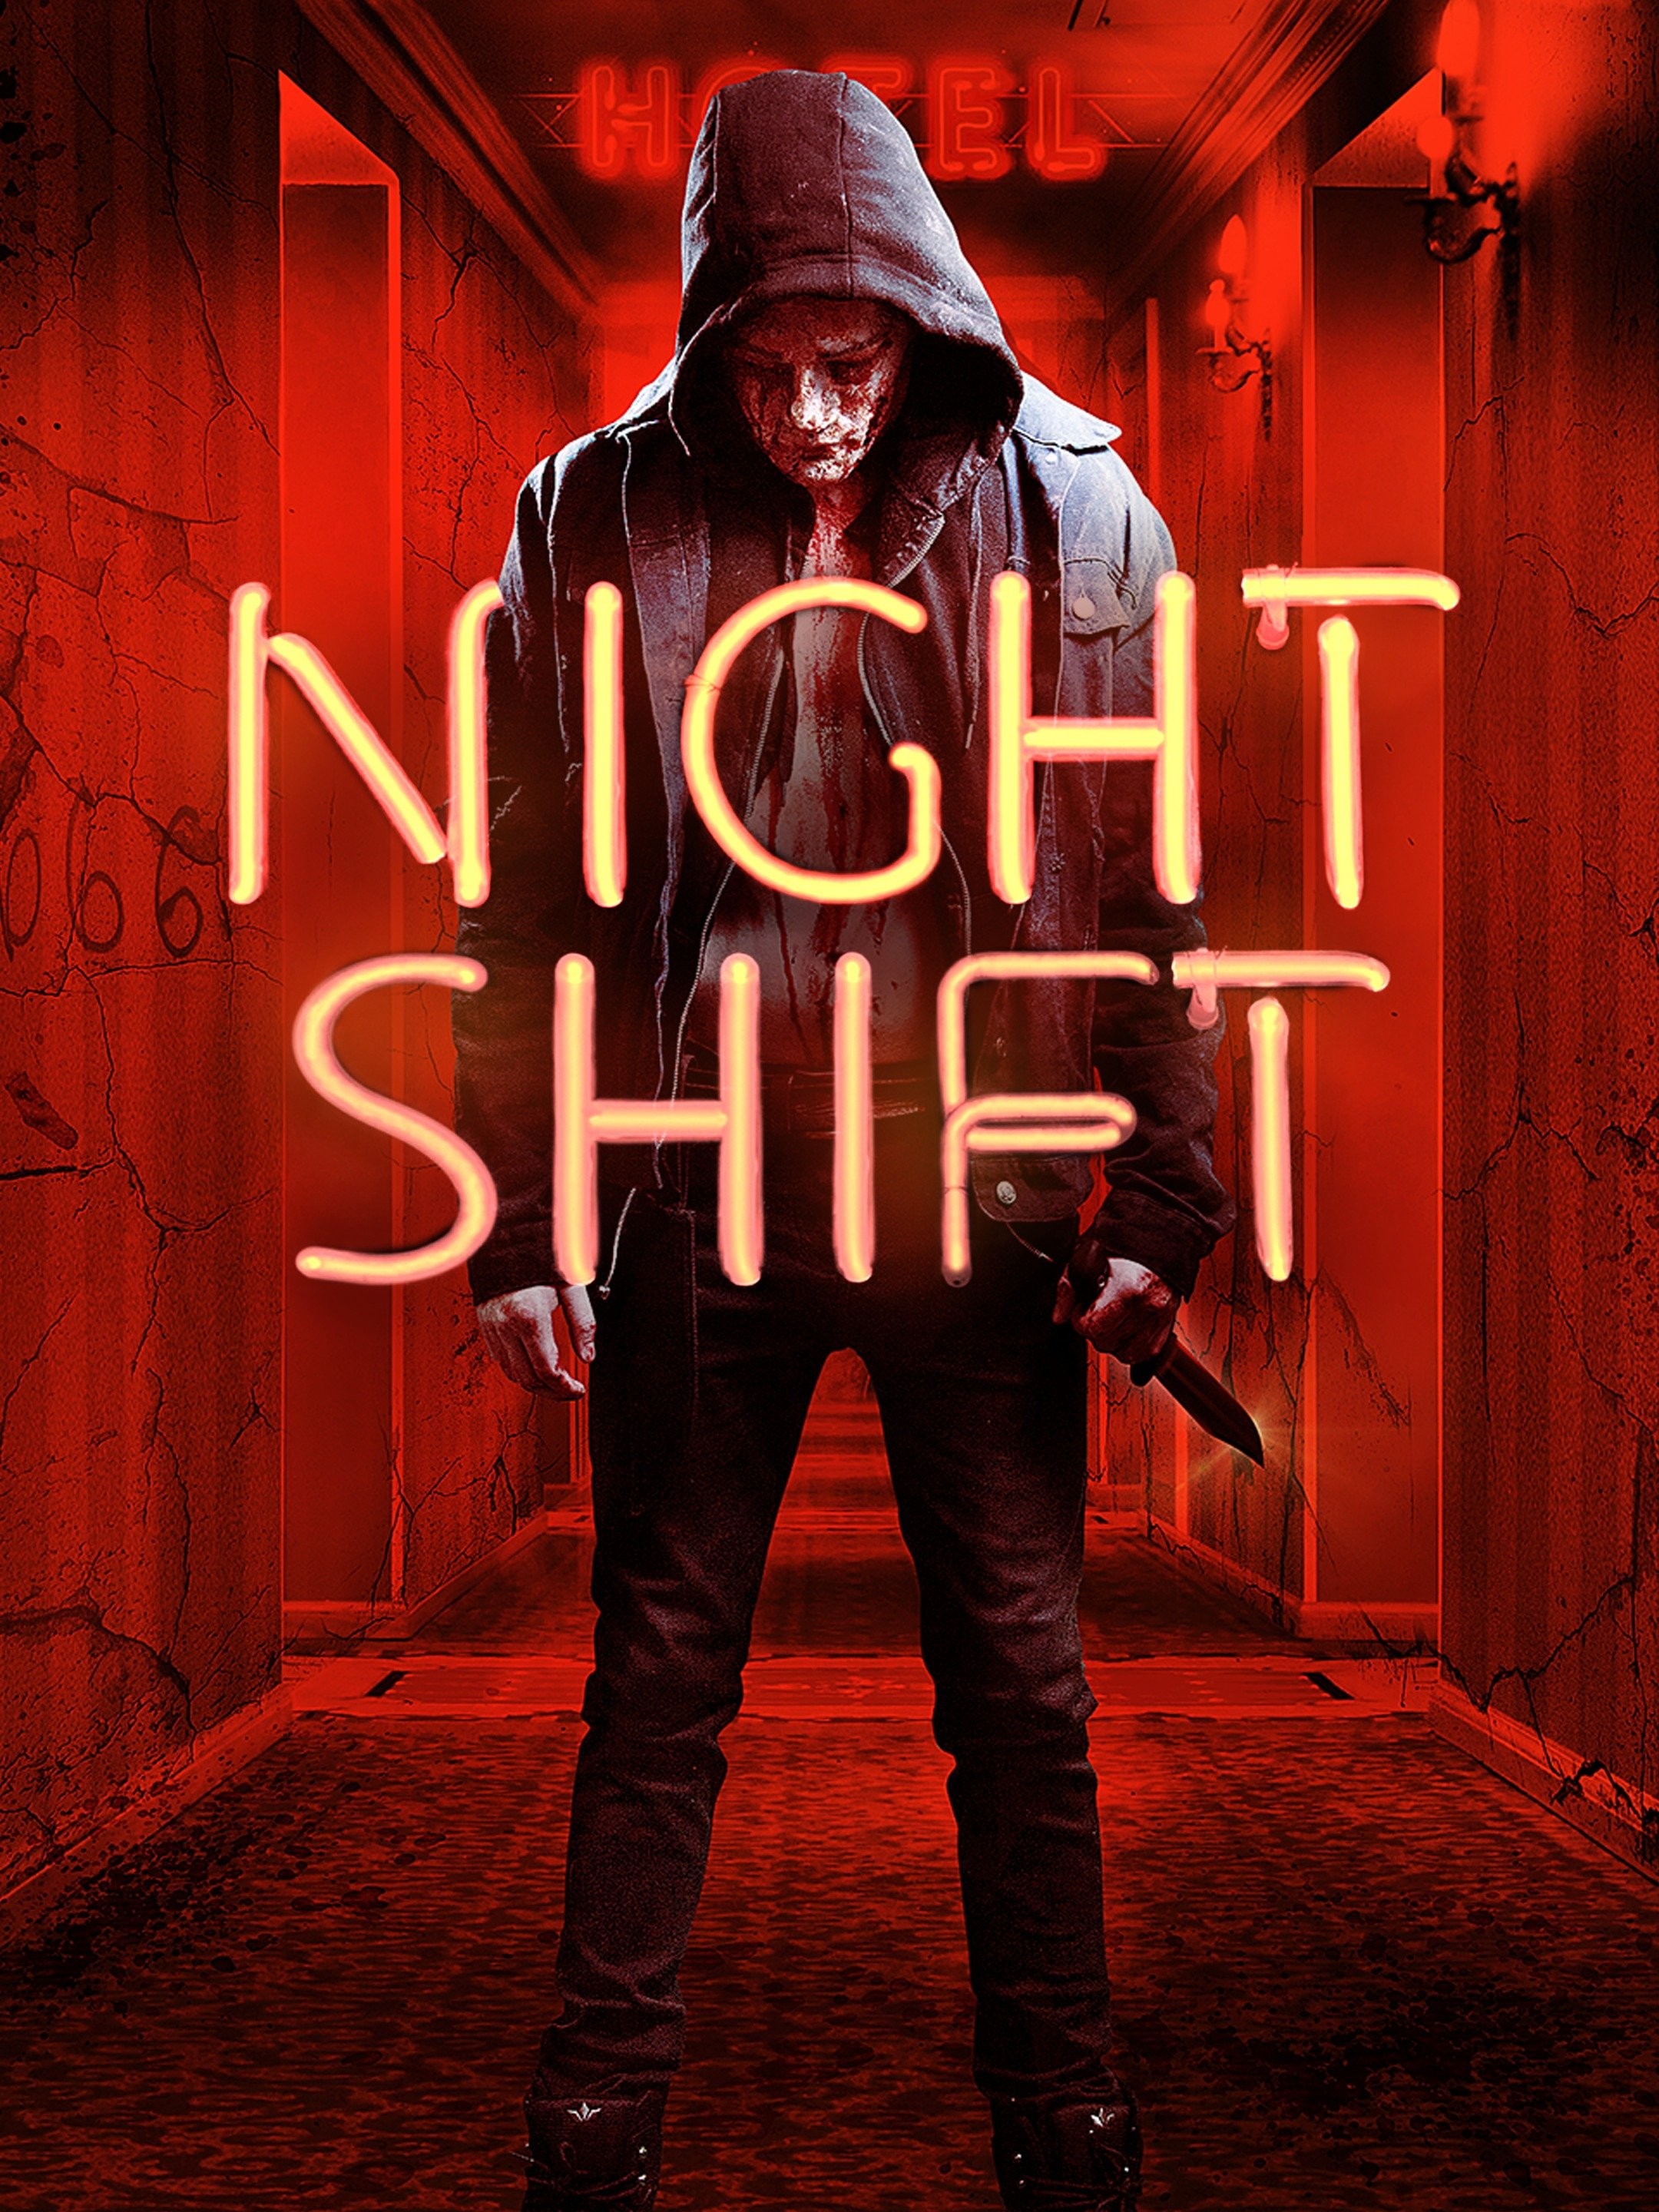 Night shift feels 👻 : r/Nightshift